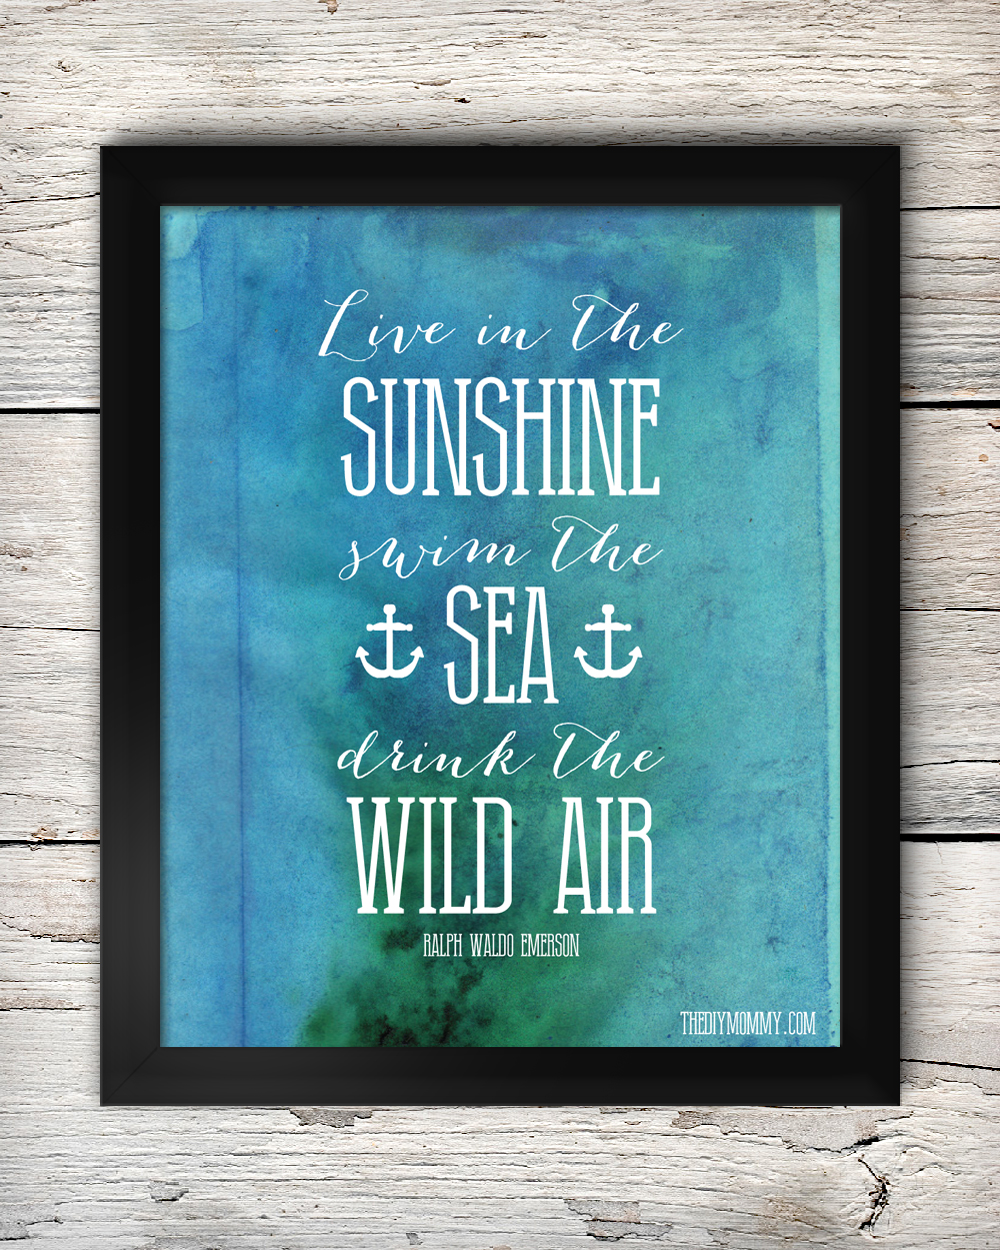 Free Summer Printable Artwork - Live in the Sunshine, Ralph Waldo Emerson